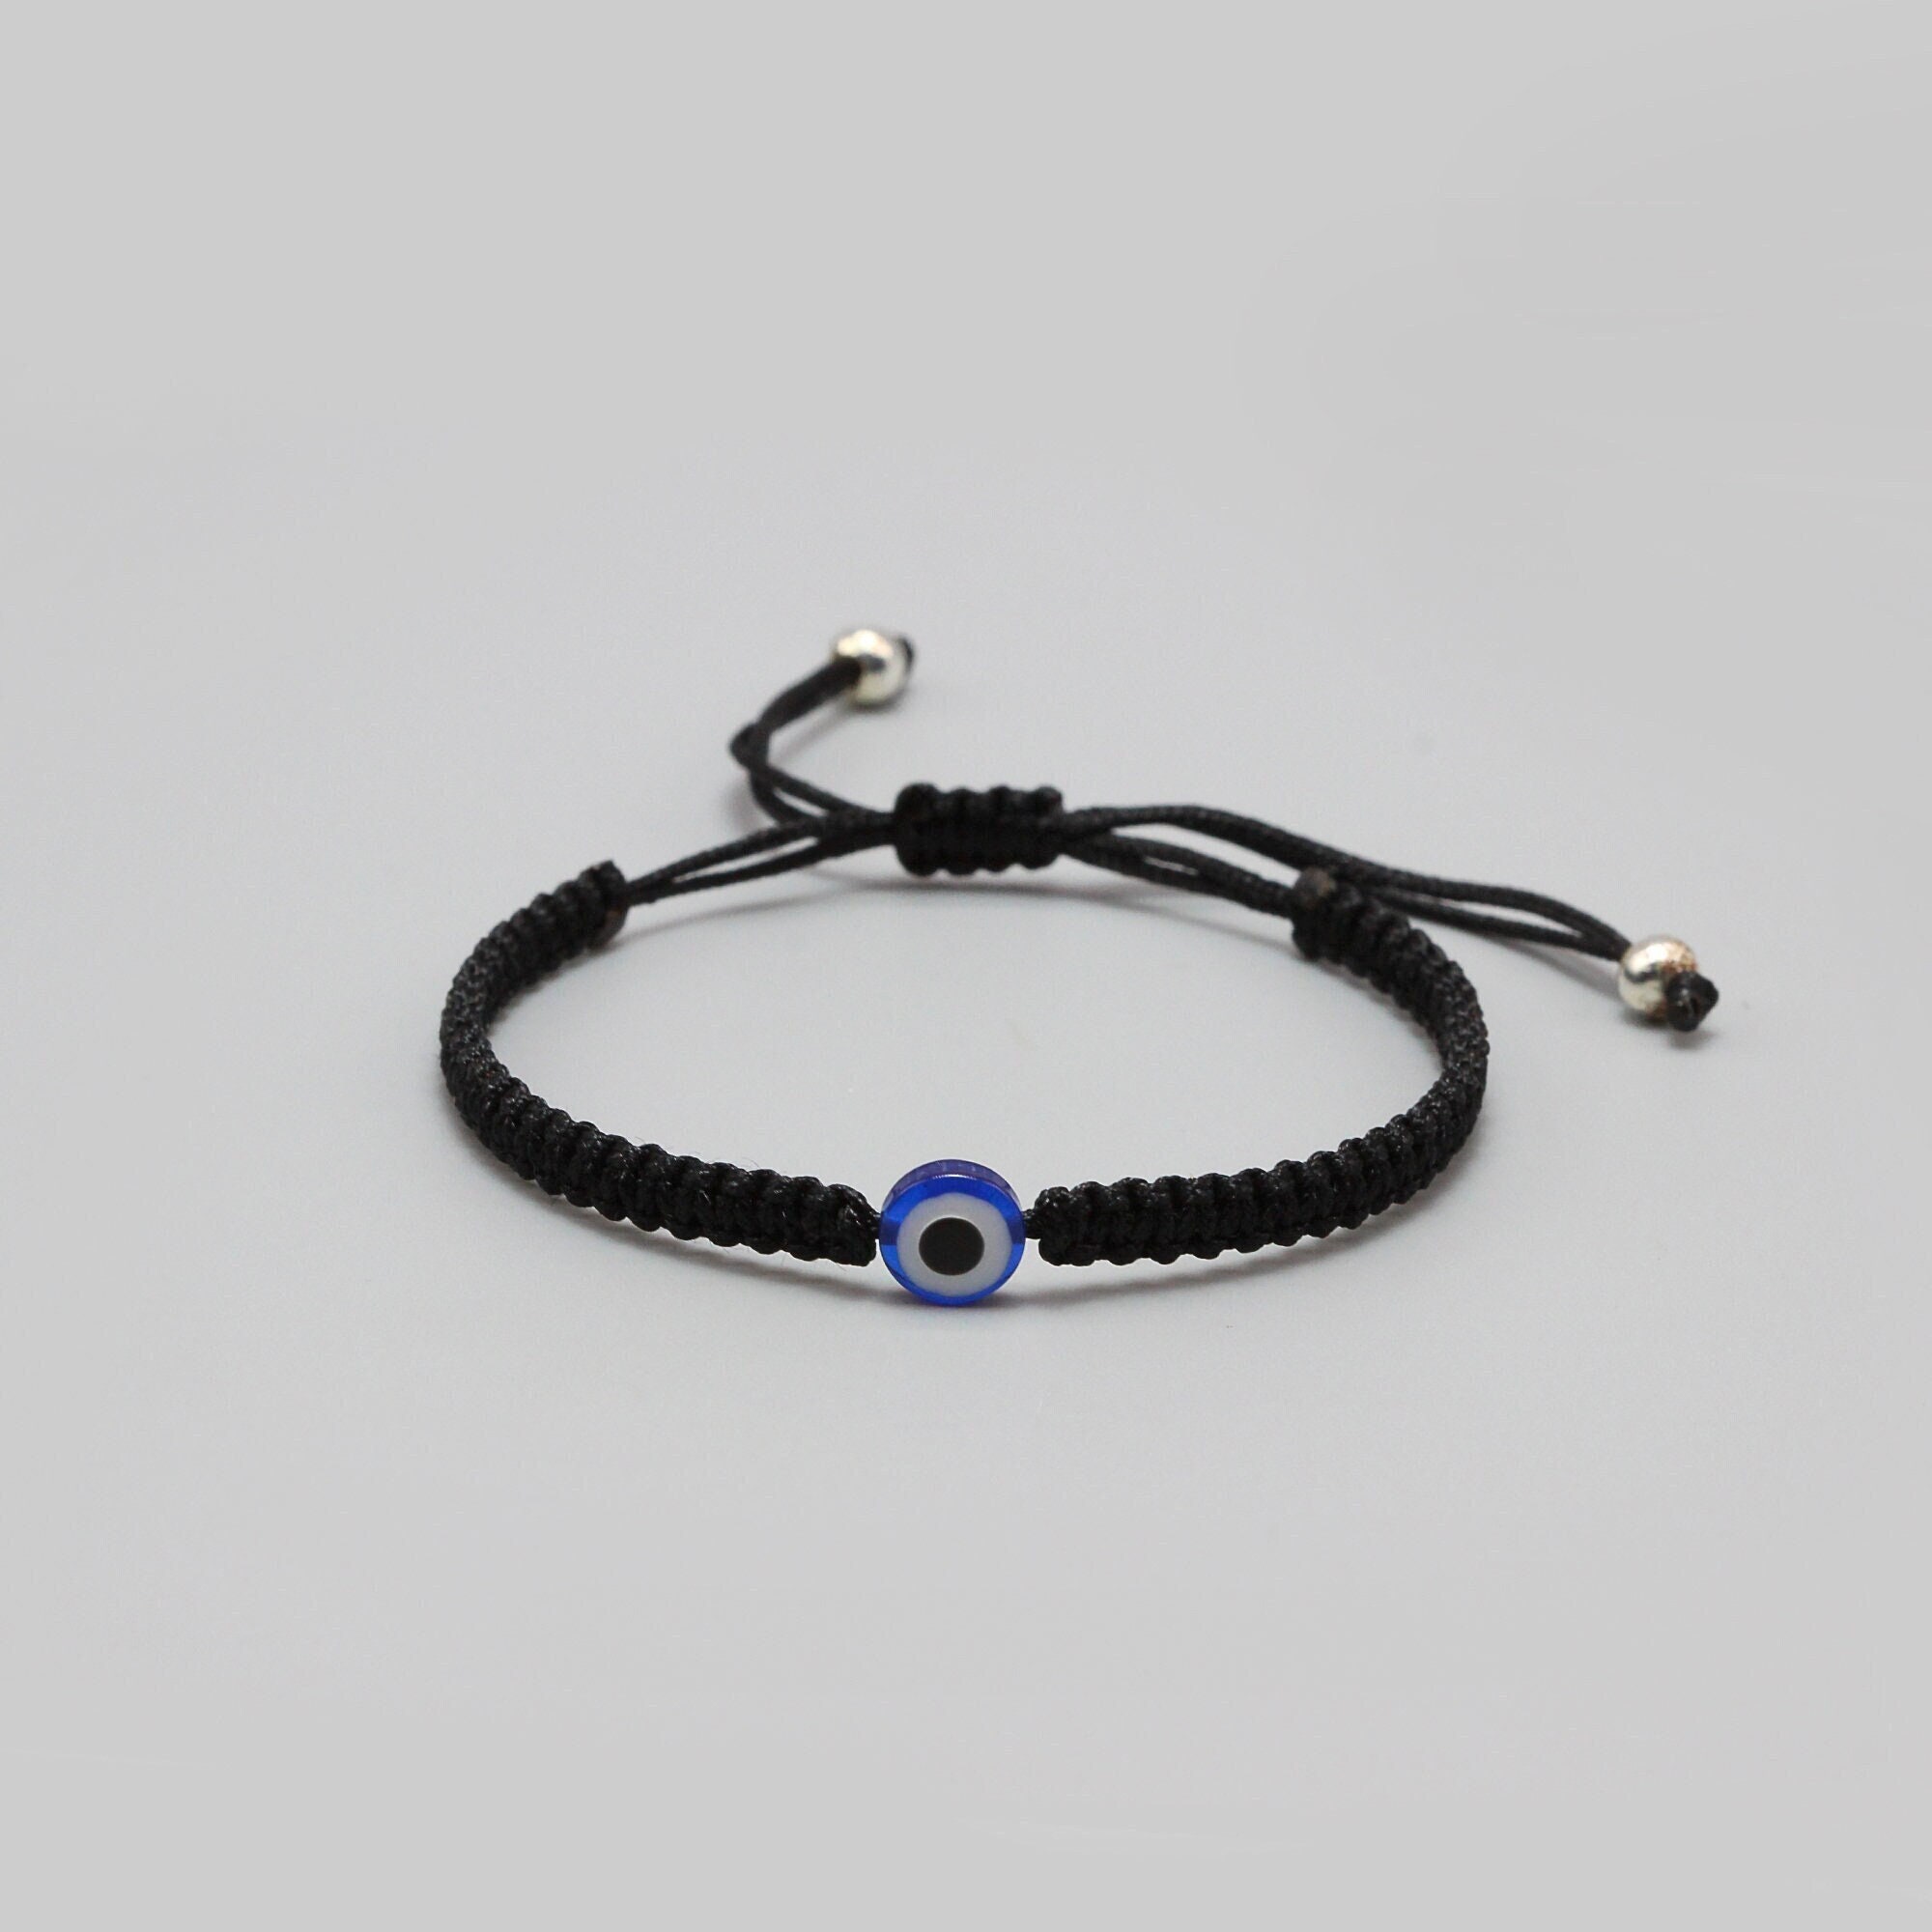 10pc blue evil eye beads, glass beads, lamp work beads, navy blue, large  round evil eye, necklace bracelet organic shaped evil eye beads